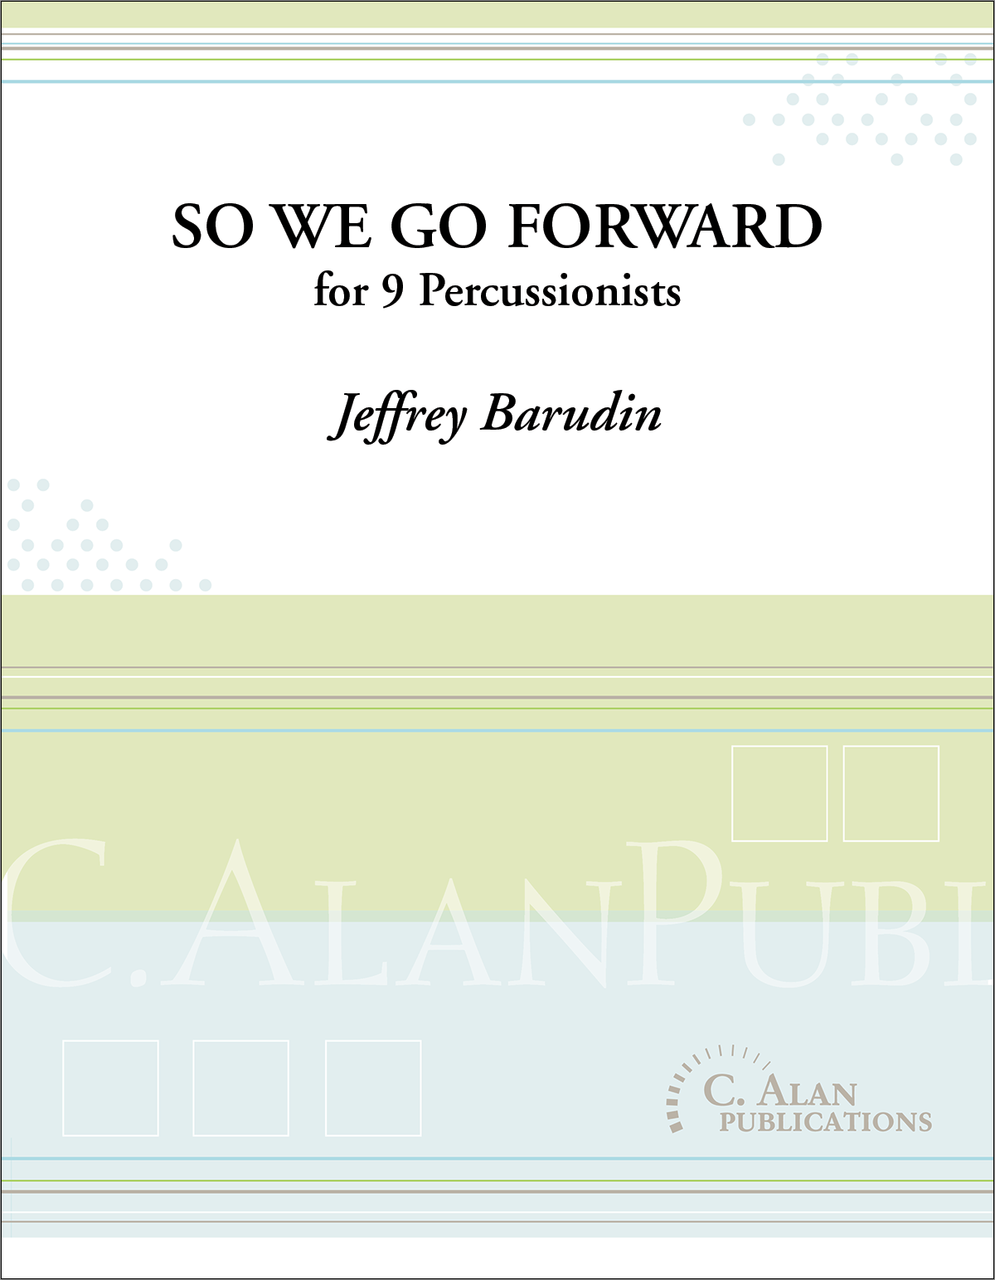 So We Go Forward by Jeffrey Barudin